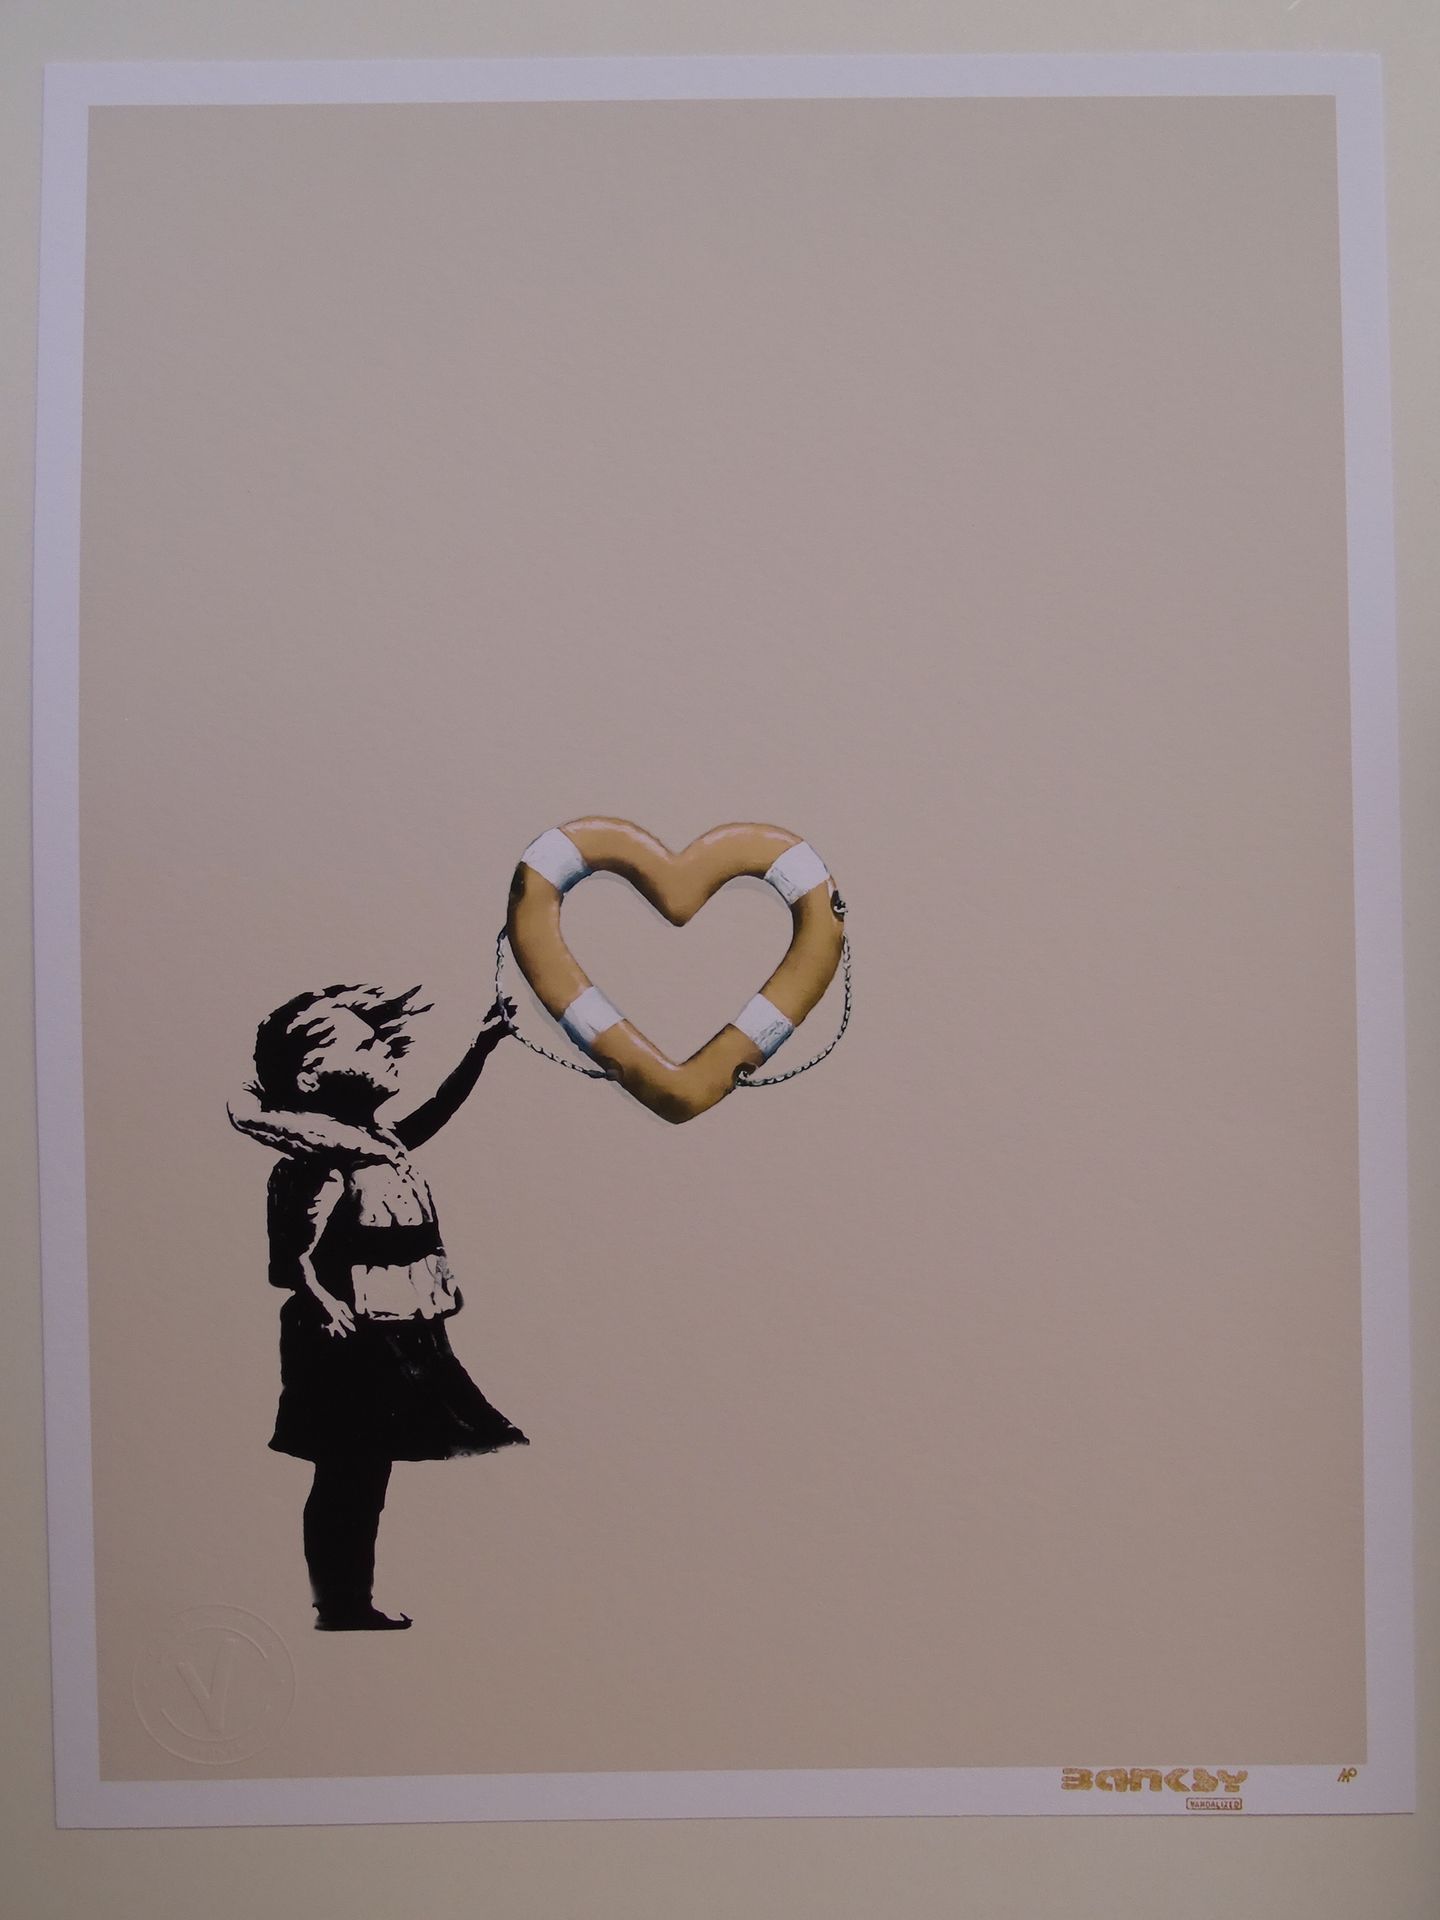 Banksy x Post Modern Vandal Banksy x Post Modern Vandal

Girl with heart-shaped &hellip;